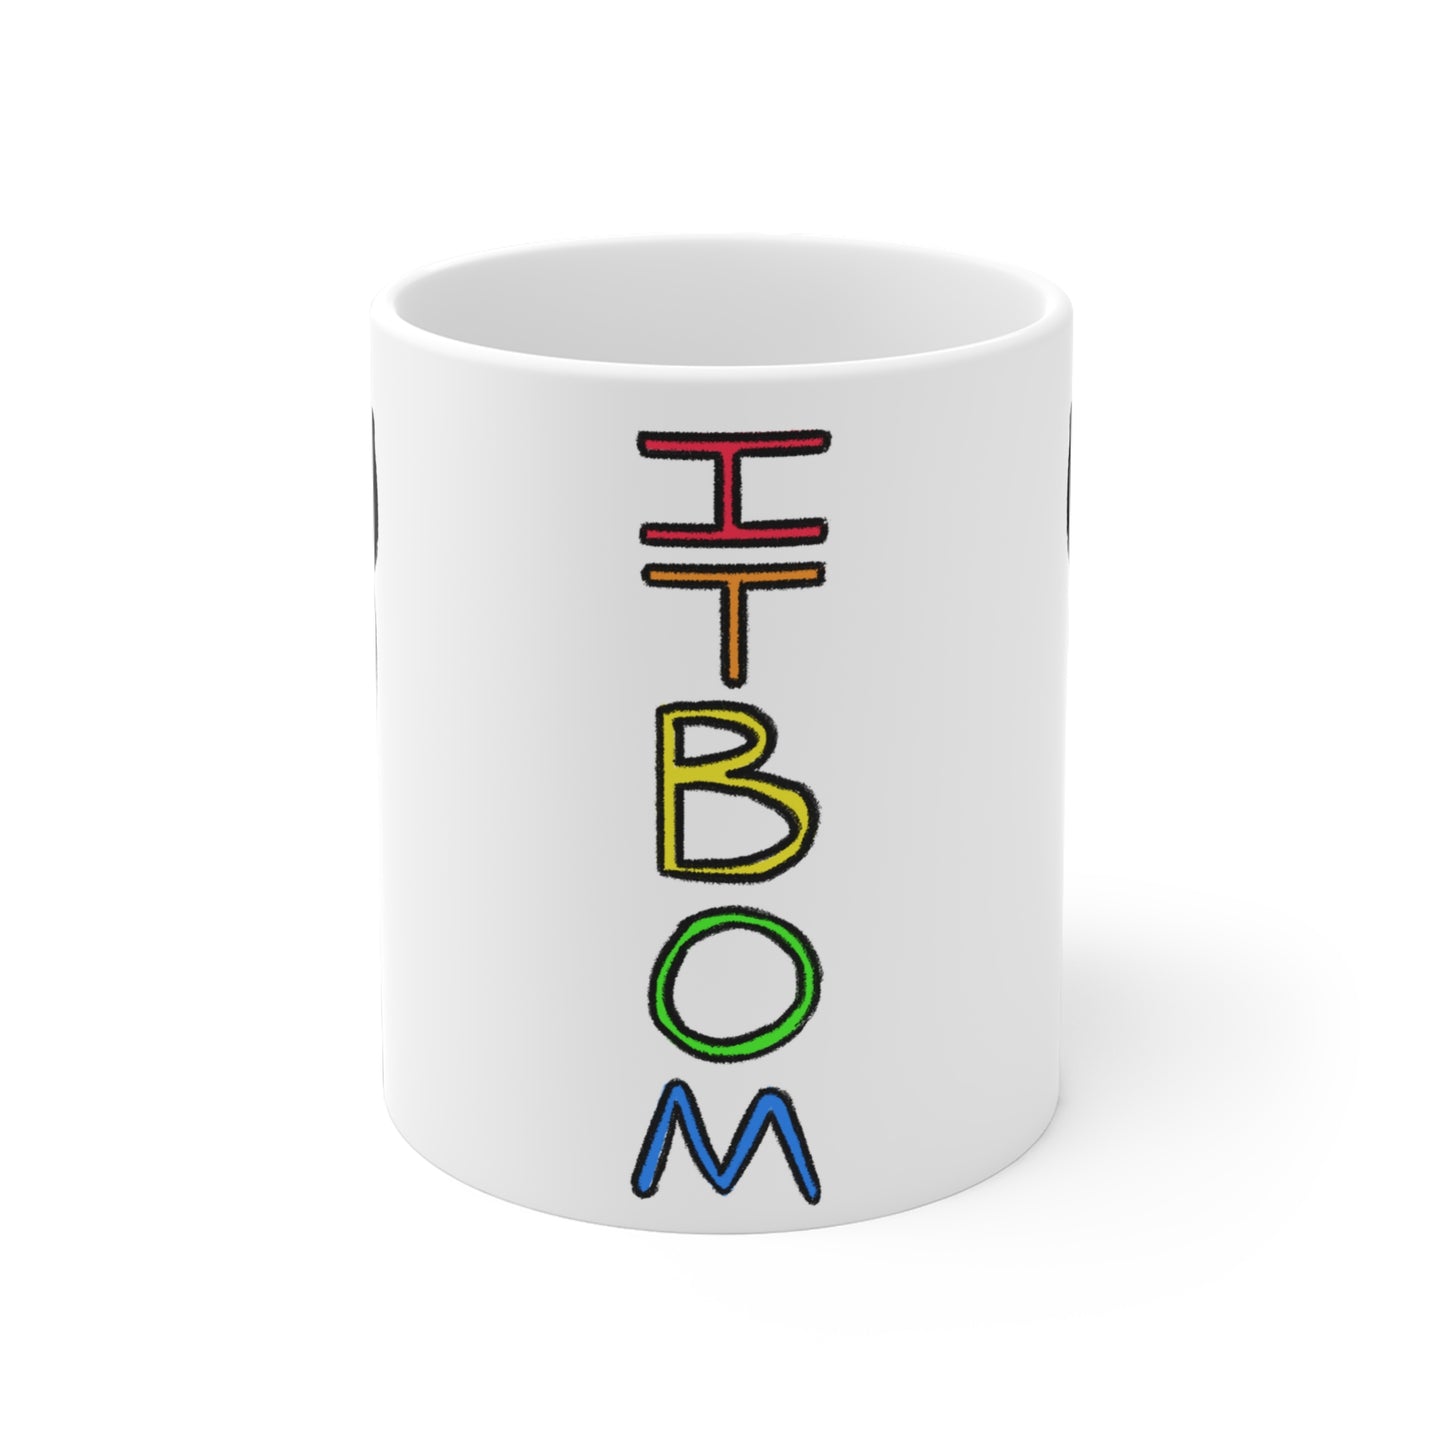 ITBOM Black Dog JACK BOSS Ceramic Mugs (11oz15oz20oz)